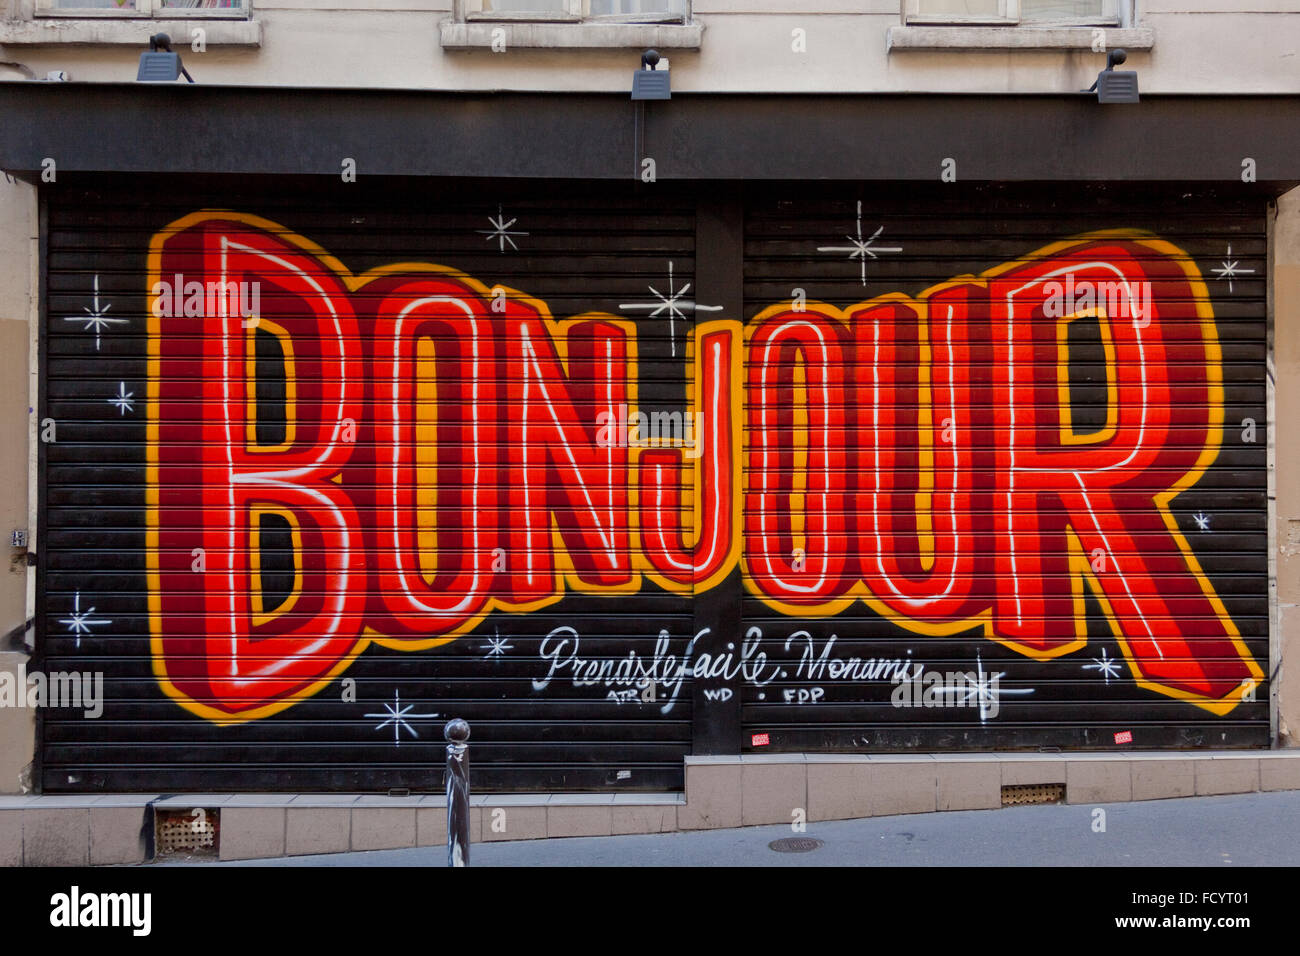 Bonjour, street art, Paris, France Stock Photo